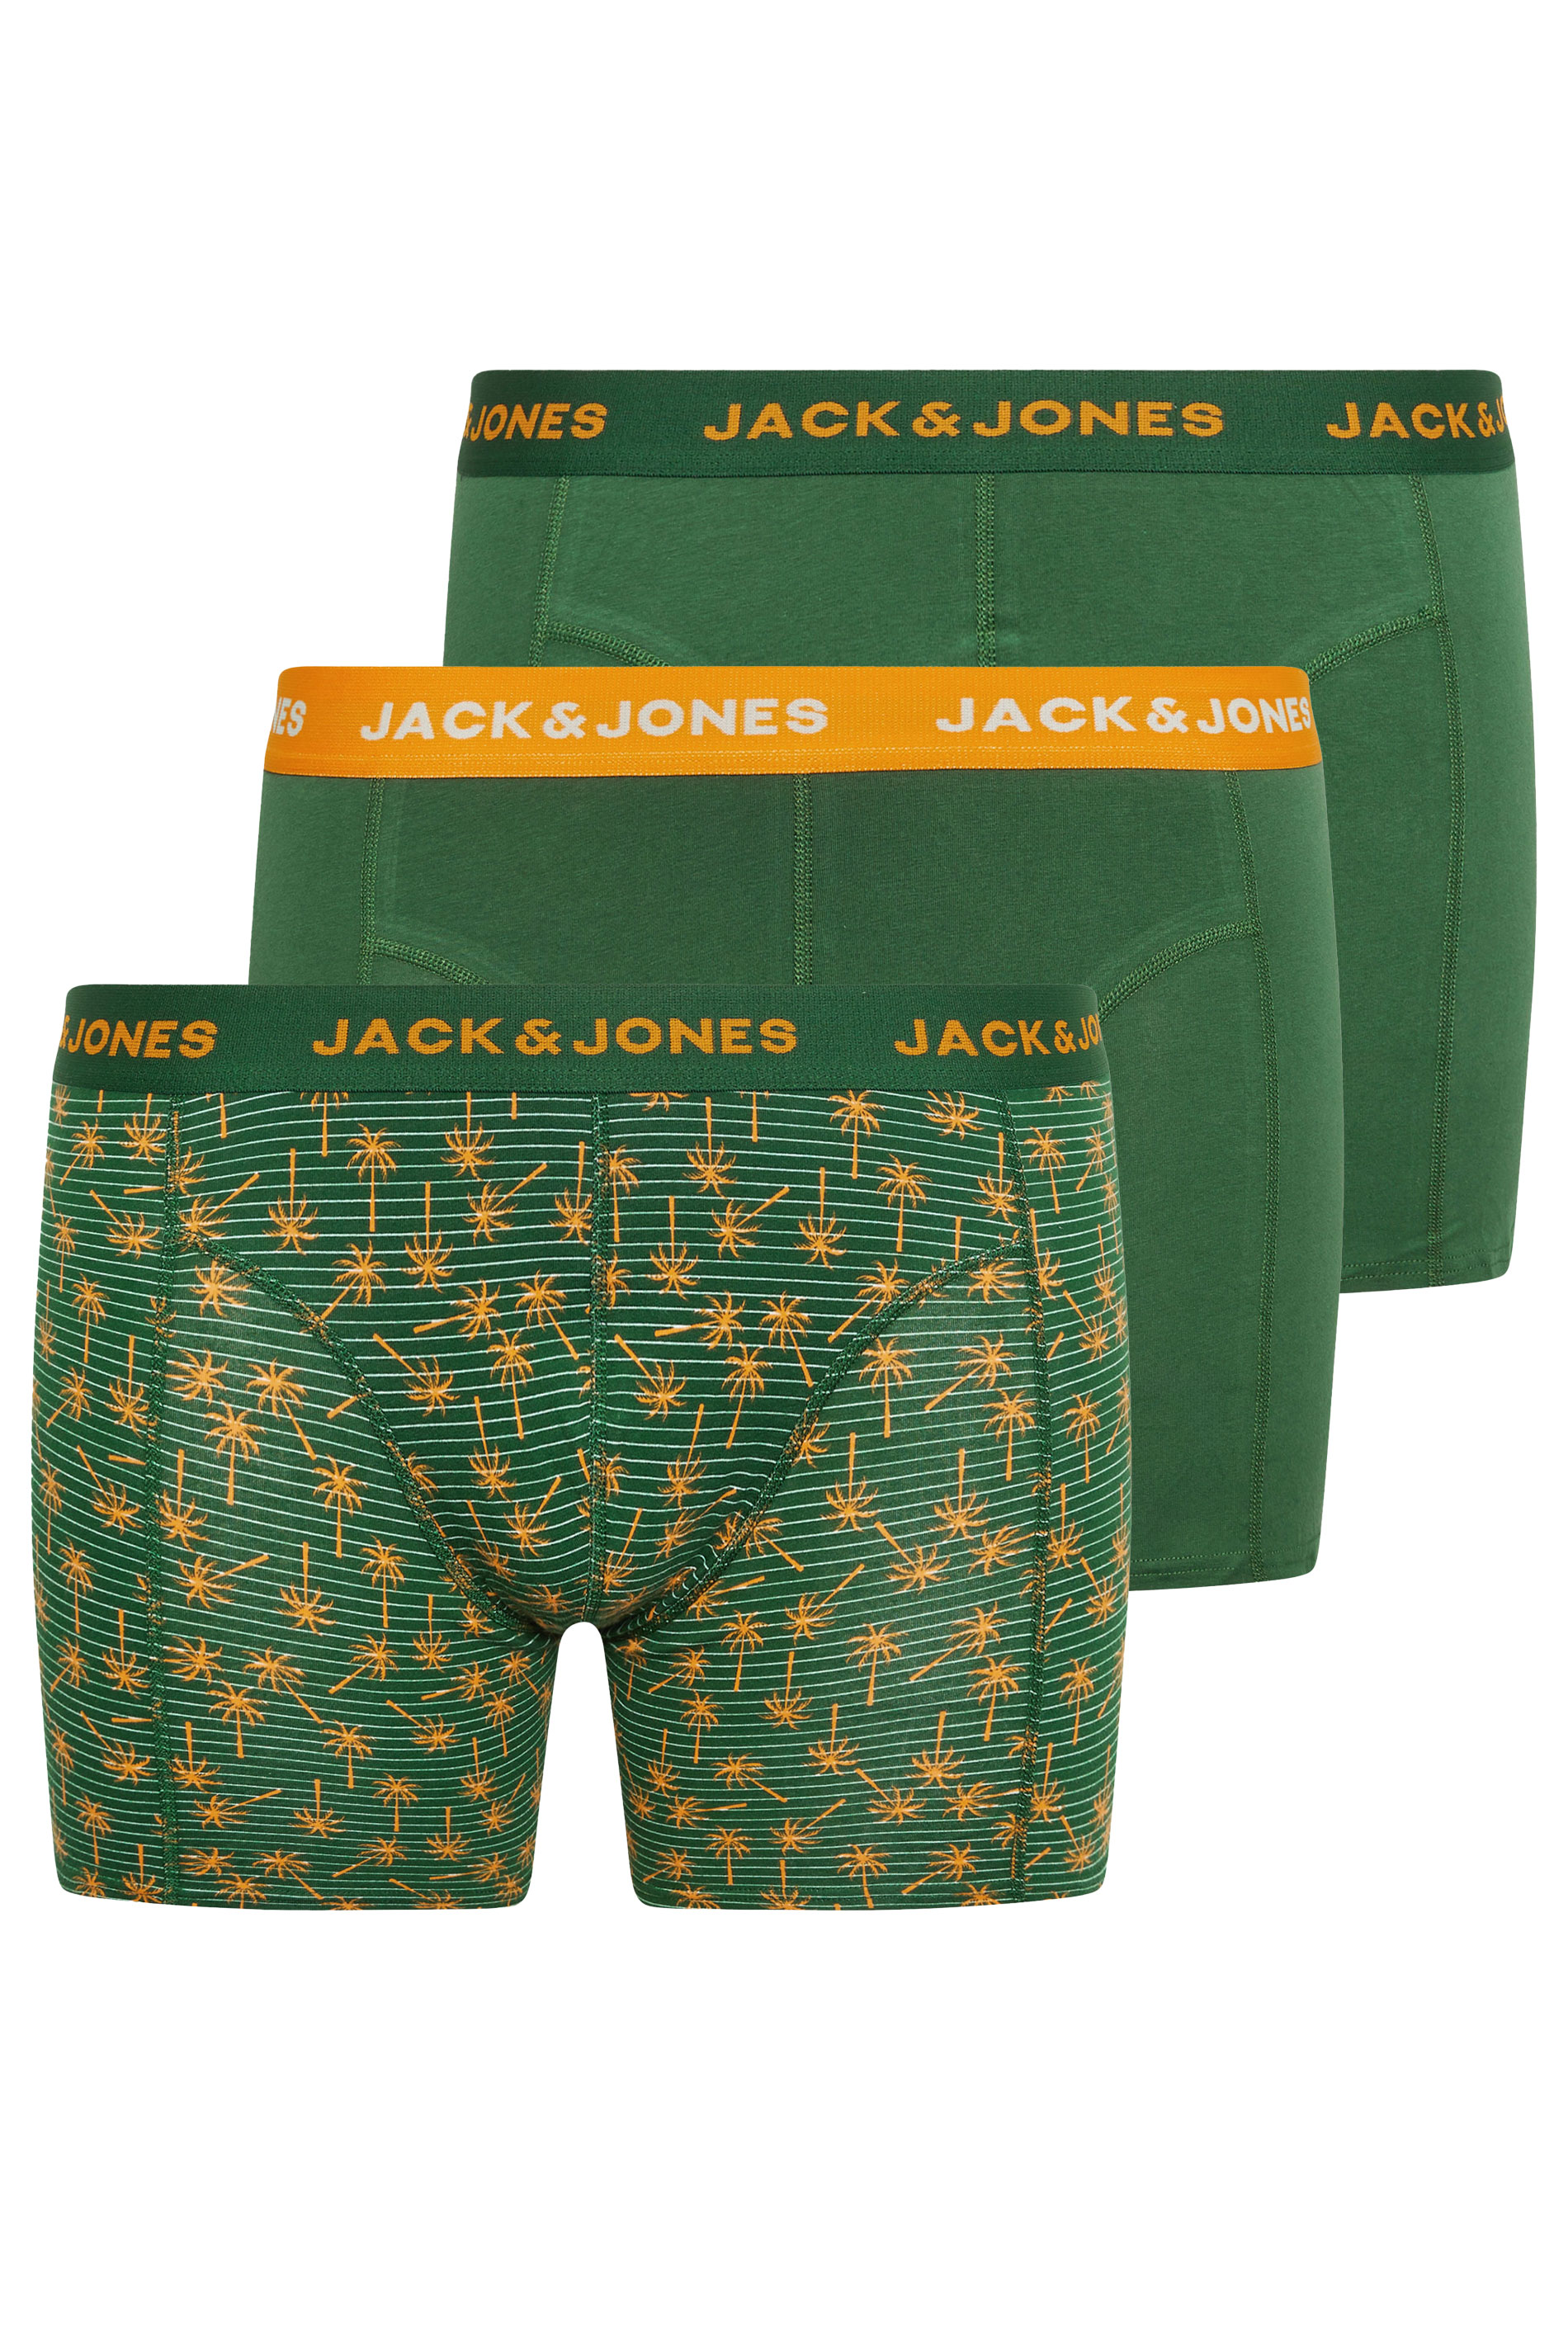 Image of Size 2Xl Mens Jack & Jones Green 3 Pack Trunks Big & Tall